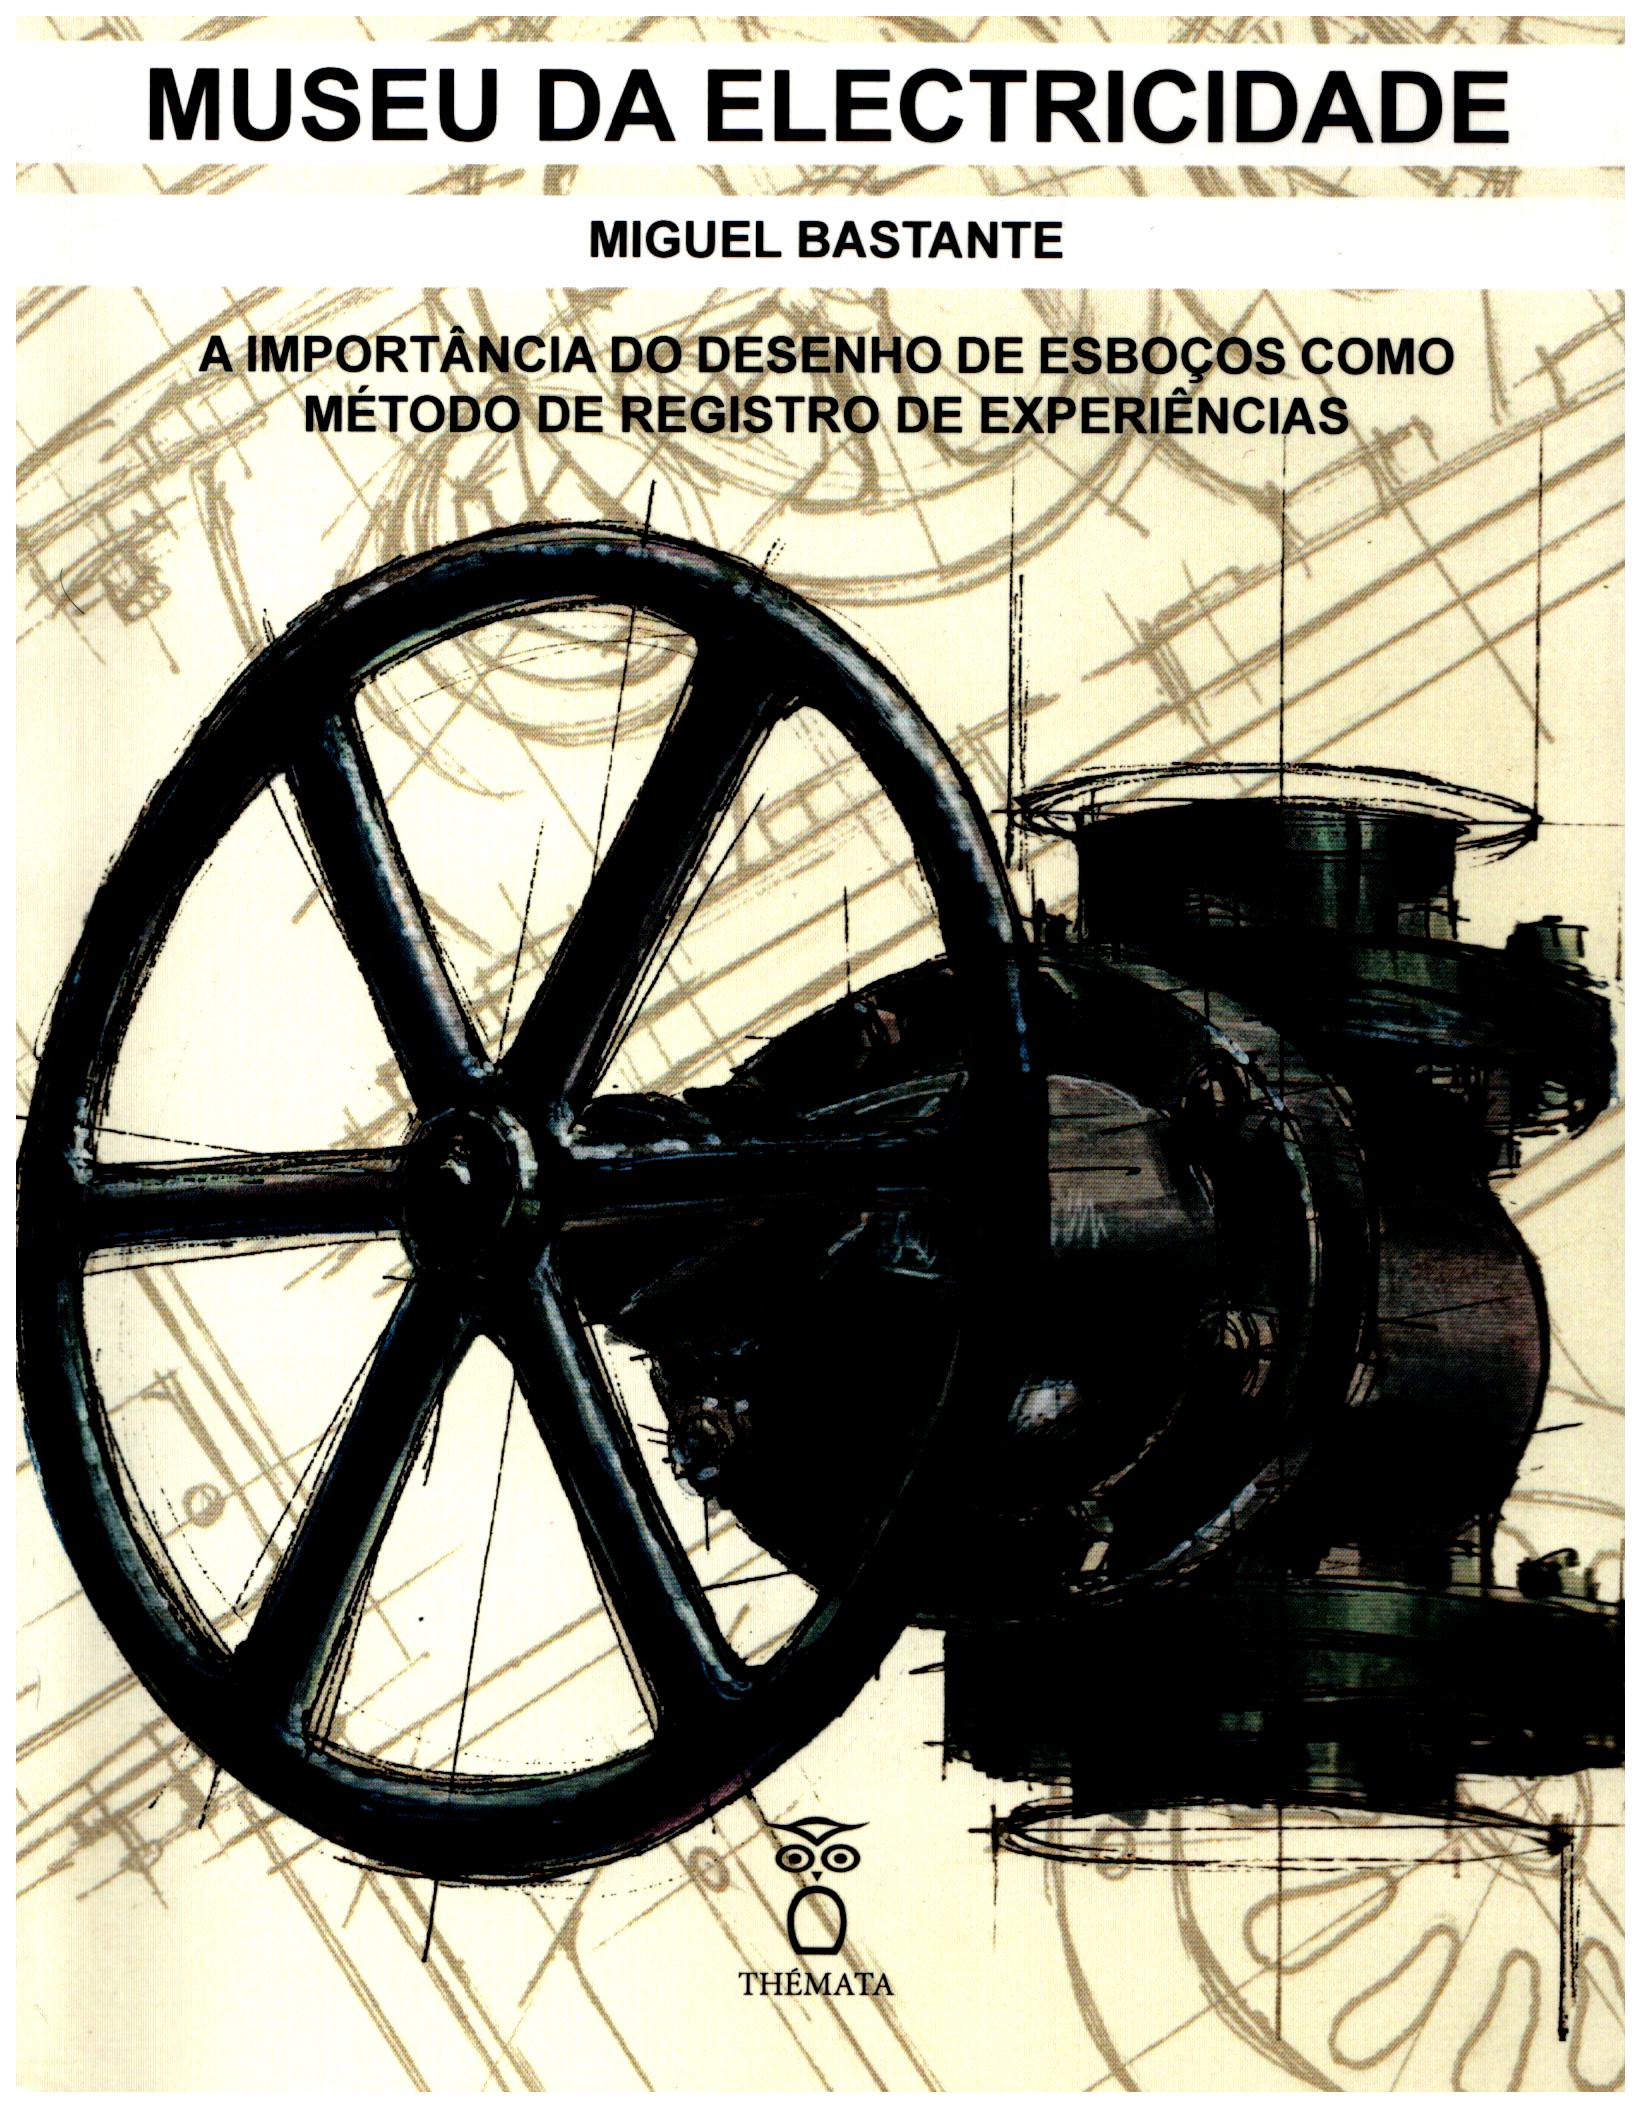 Imagen de portada del libro Museu da Electricidade